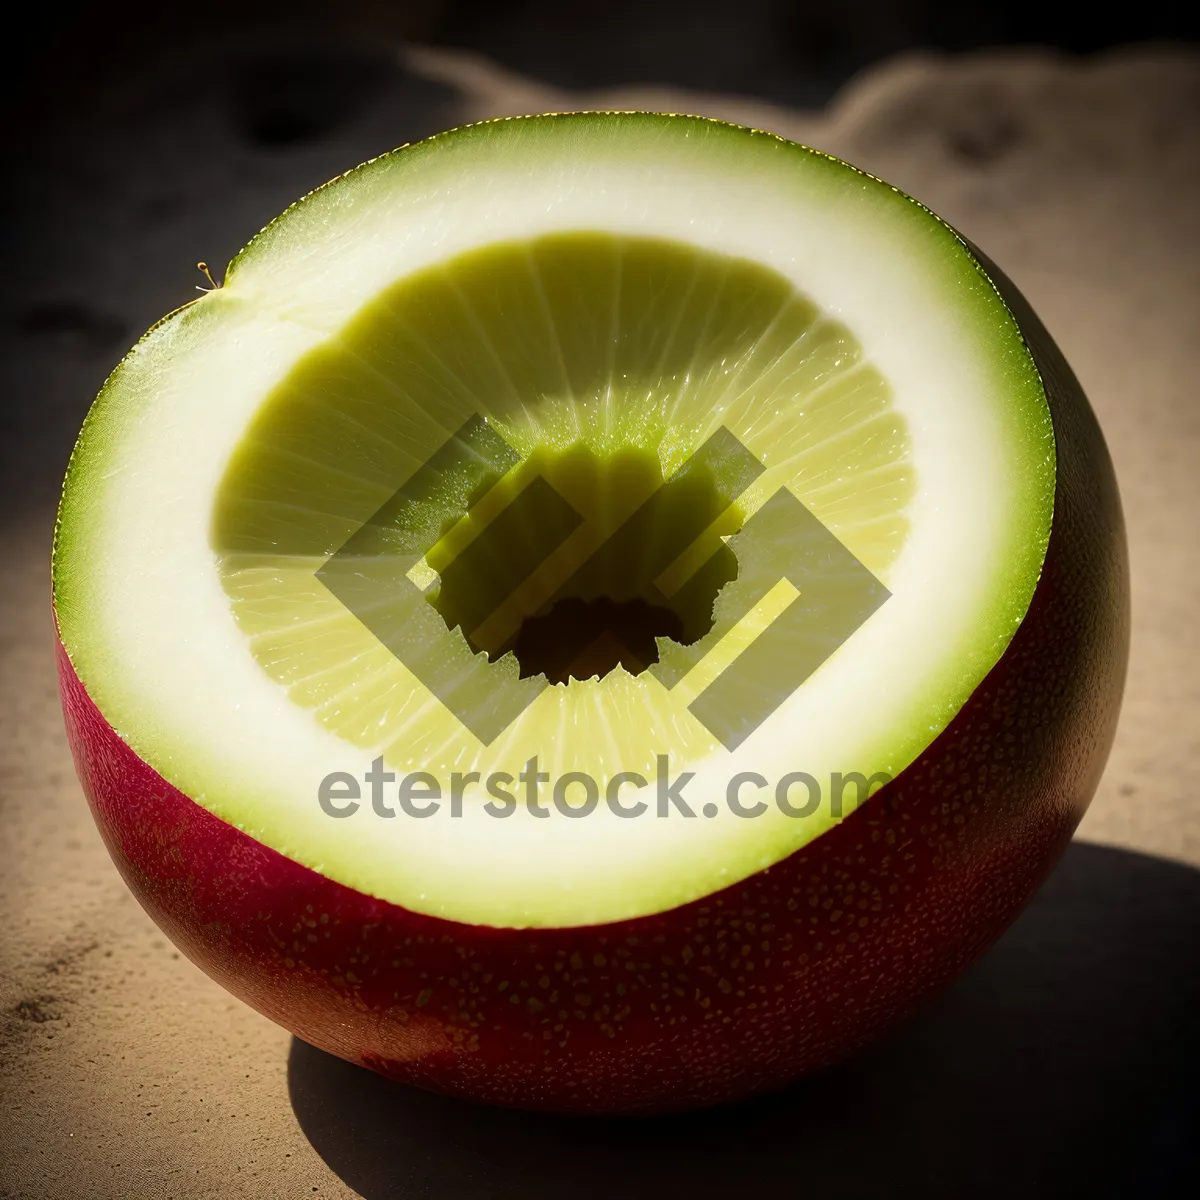 Picture of Refreshing Tropical Fruit Slices - Apple, Orange, Kiwi, Lime